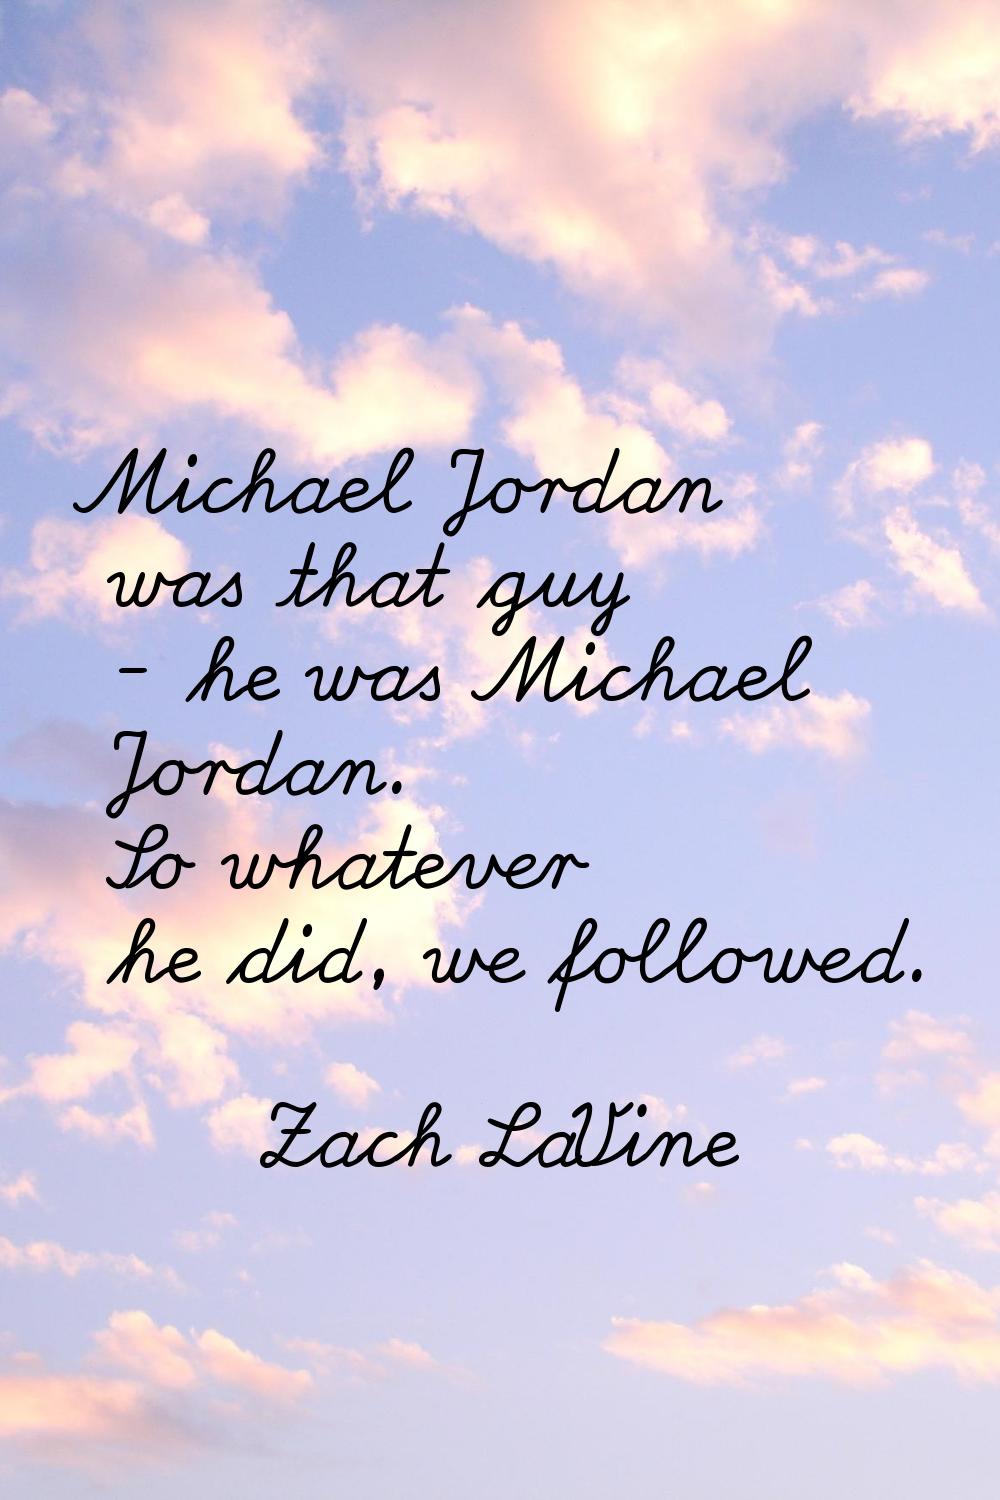 Michael Jordan was that guy - he was Michael Jordan. So whatever he did, we followed.